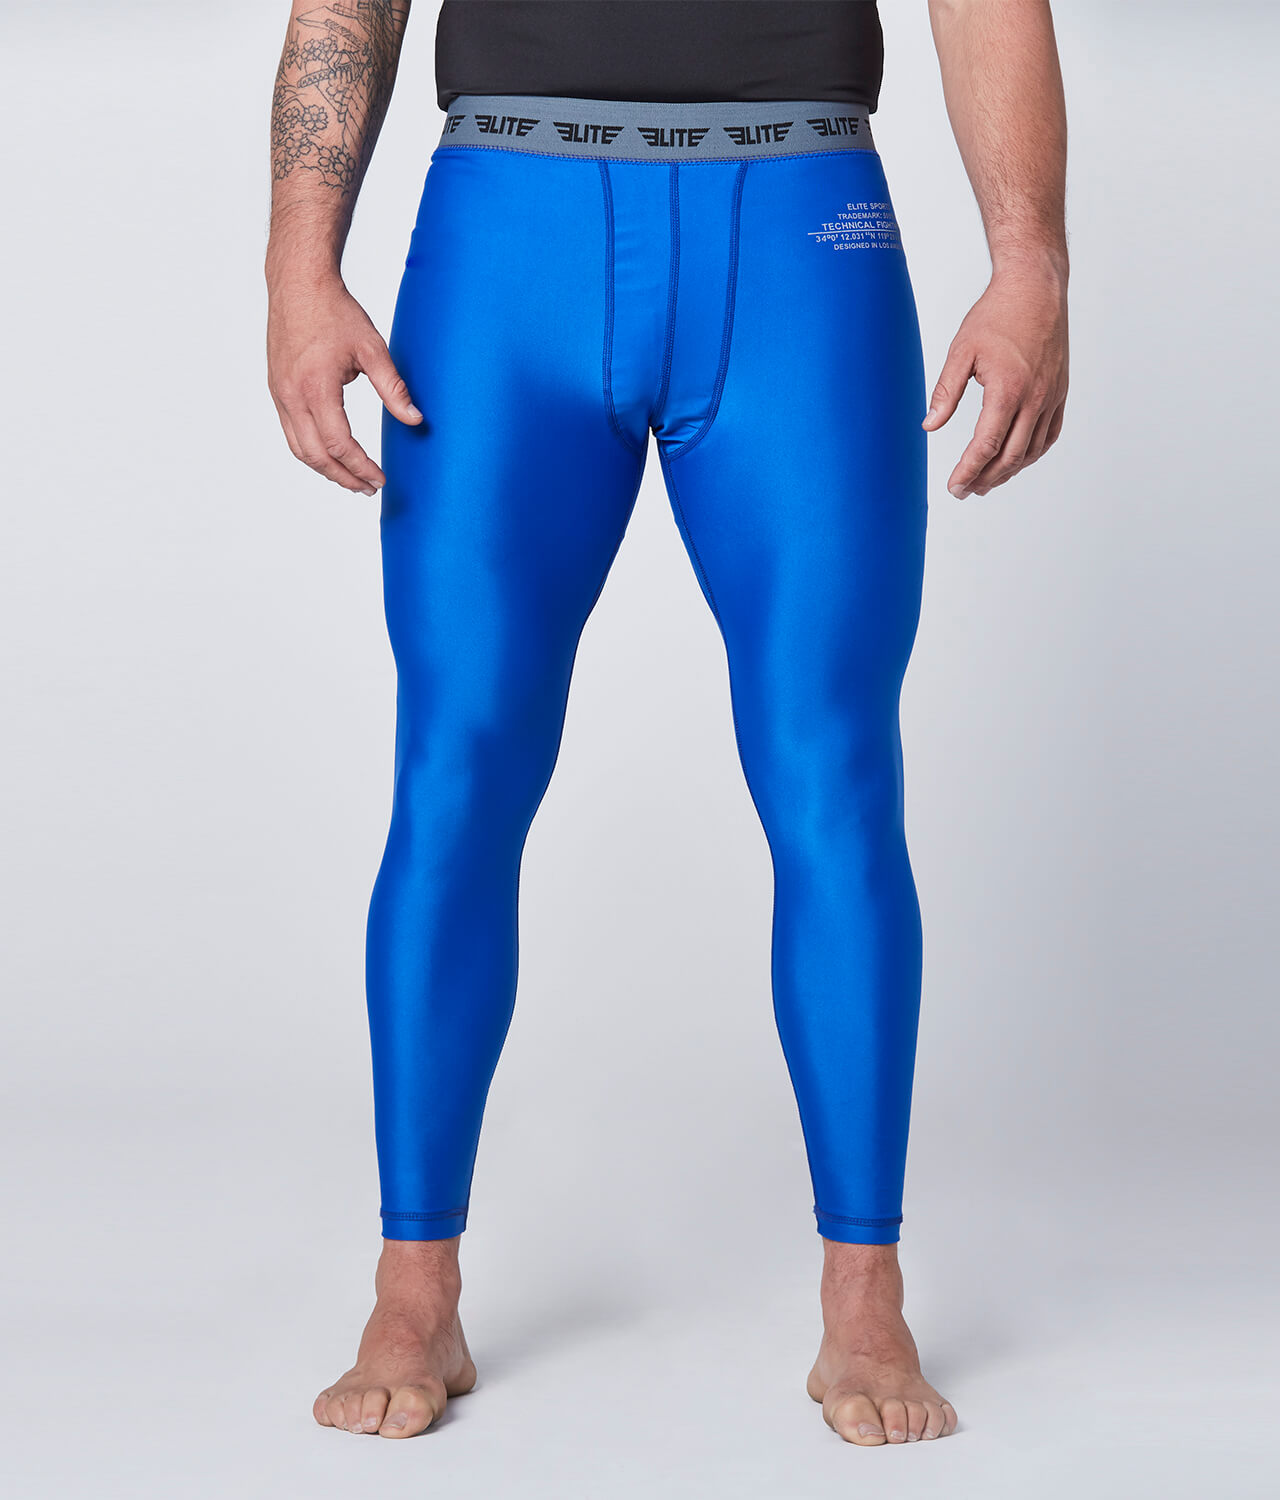 Men's Plain Blue Compression Wrestling Spat Pants